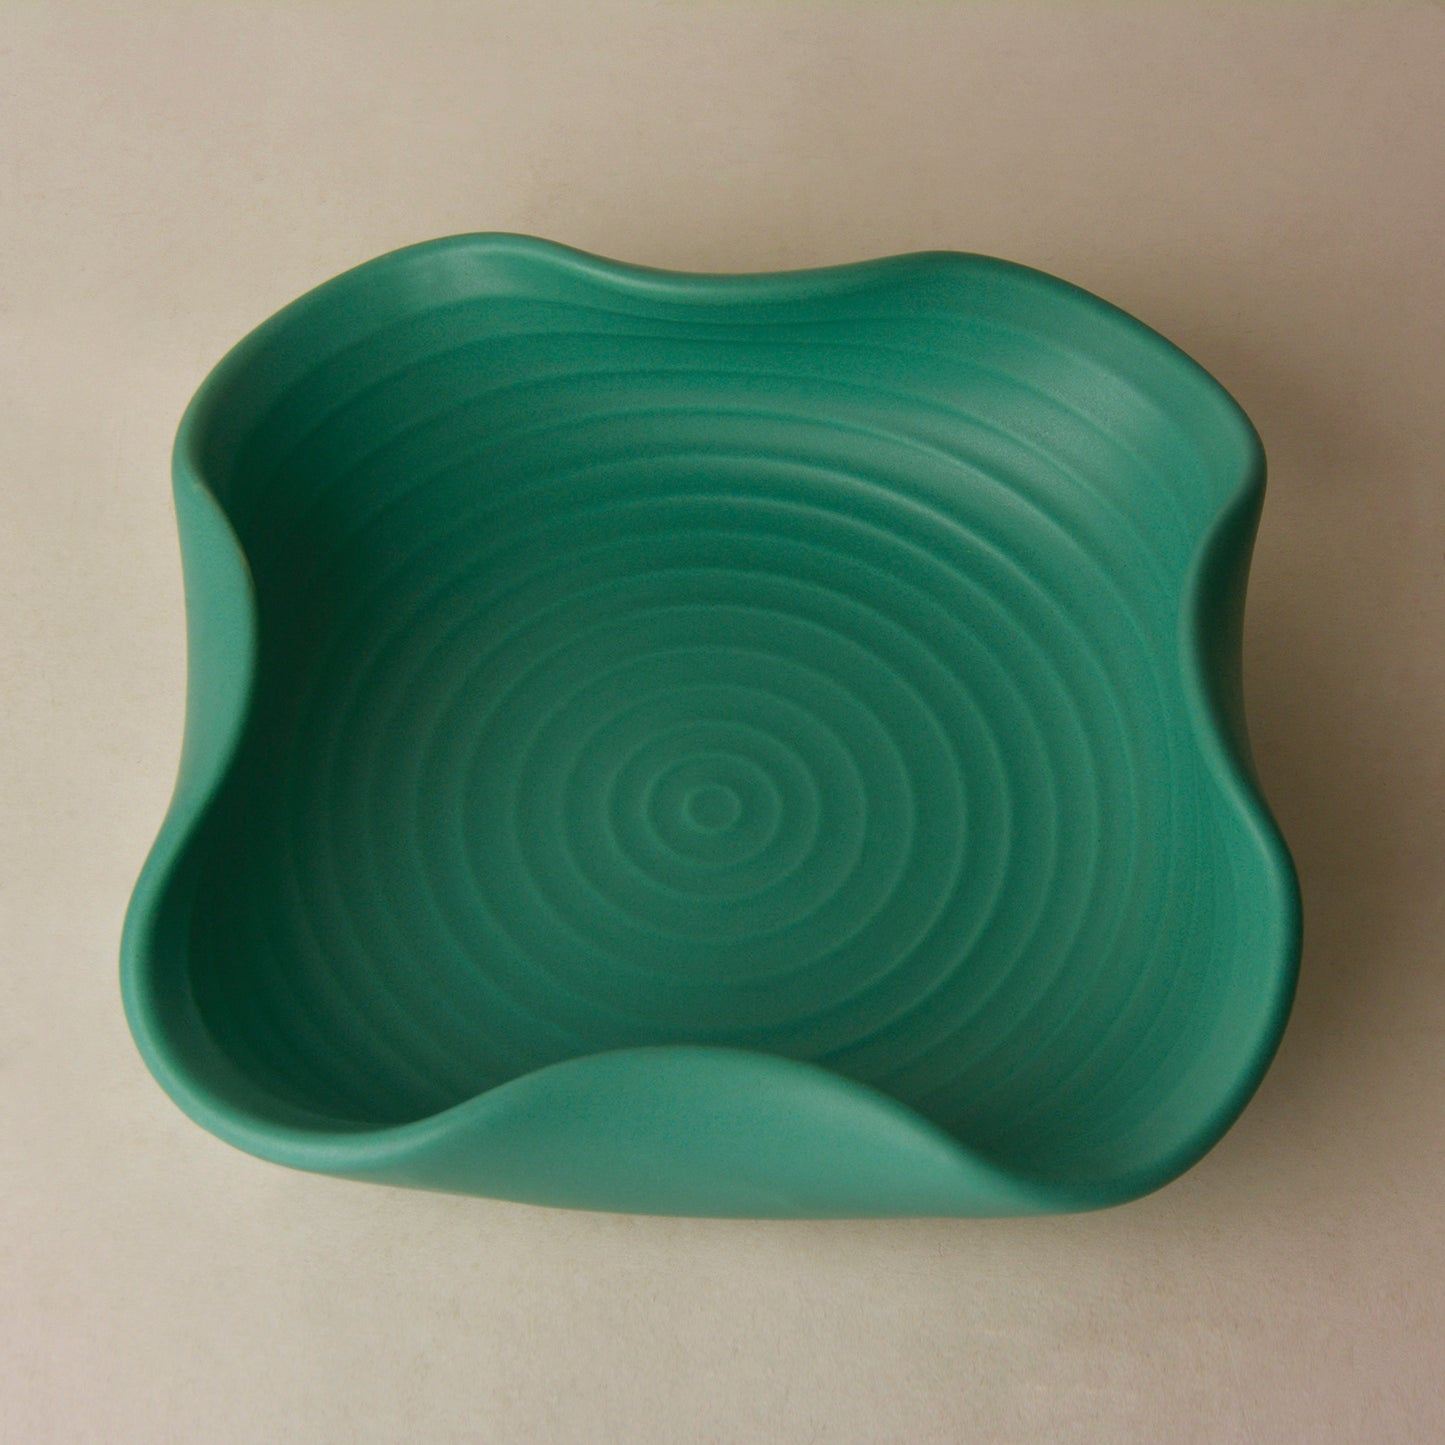 Ceramic Matt Finish Stylish Serving Bowl (22 cm , Sea Green)